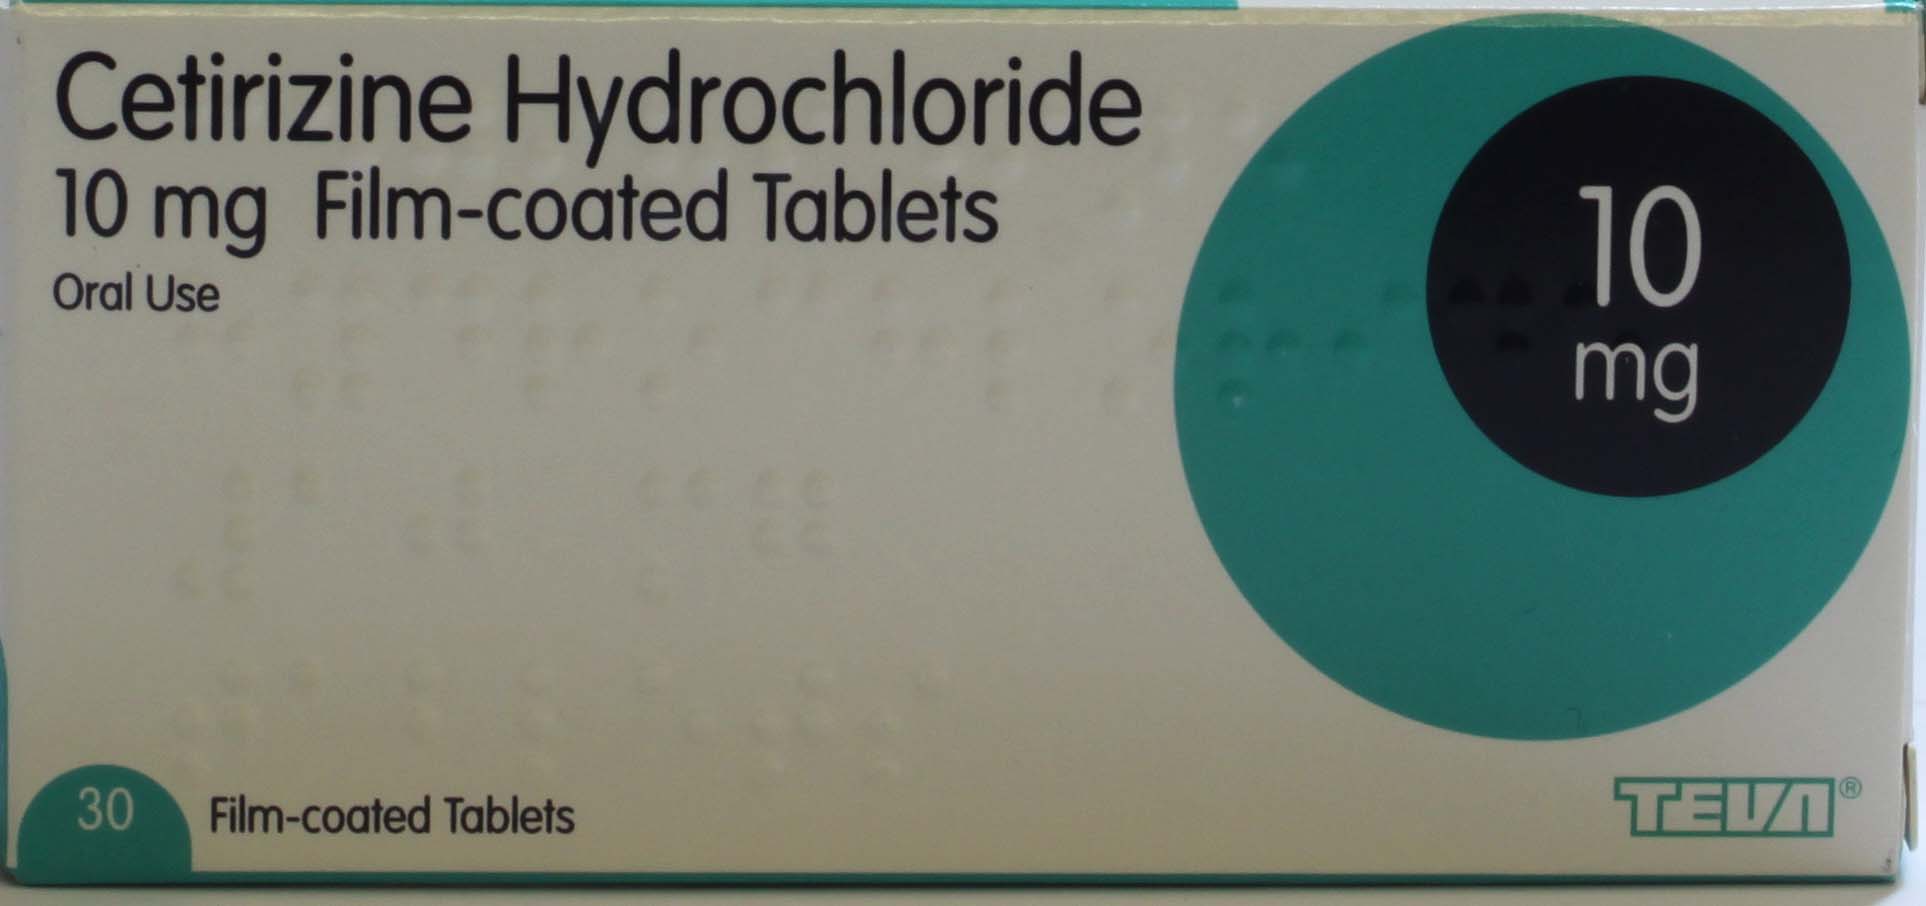 Cetirizine Hydrochloride 10mg 30 Film-coated Tablets